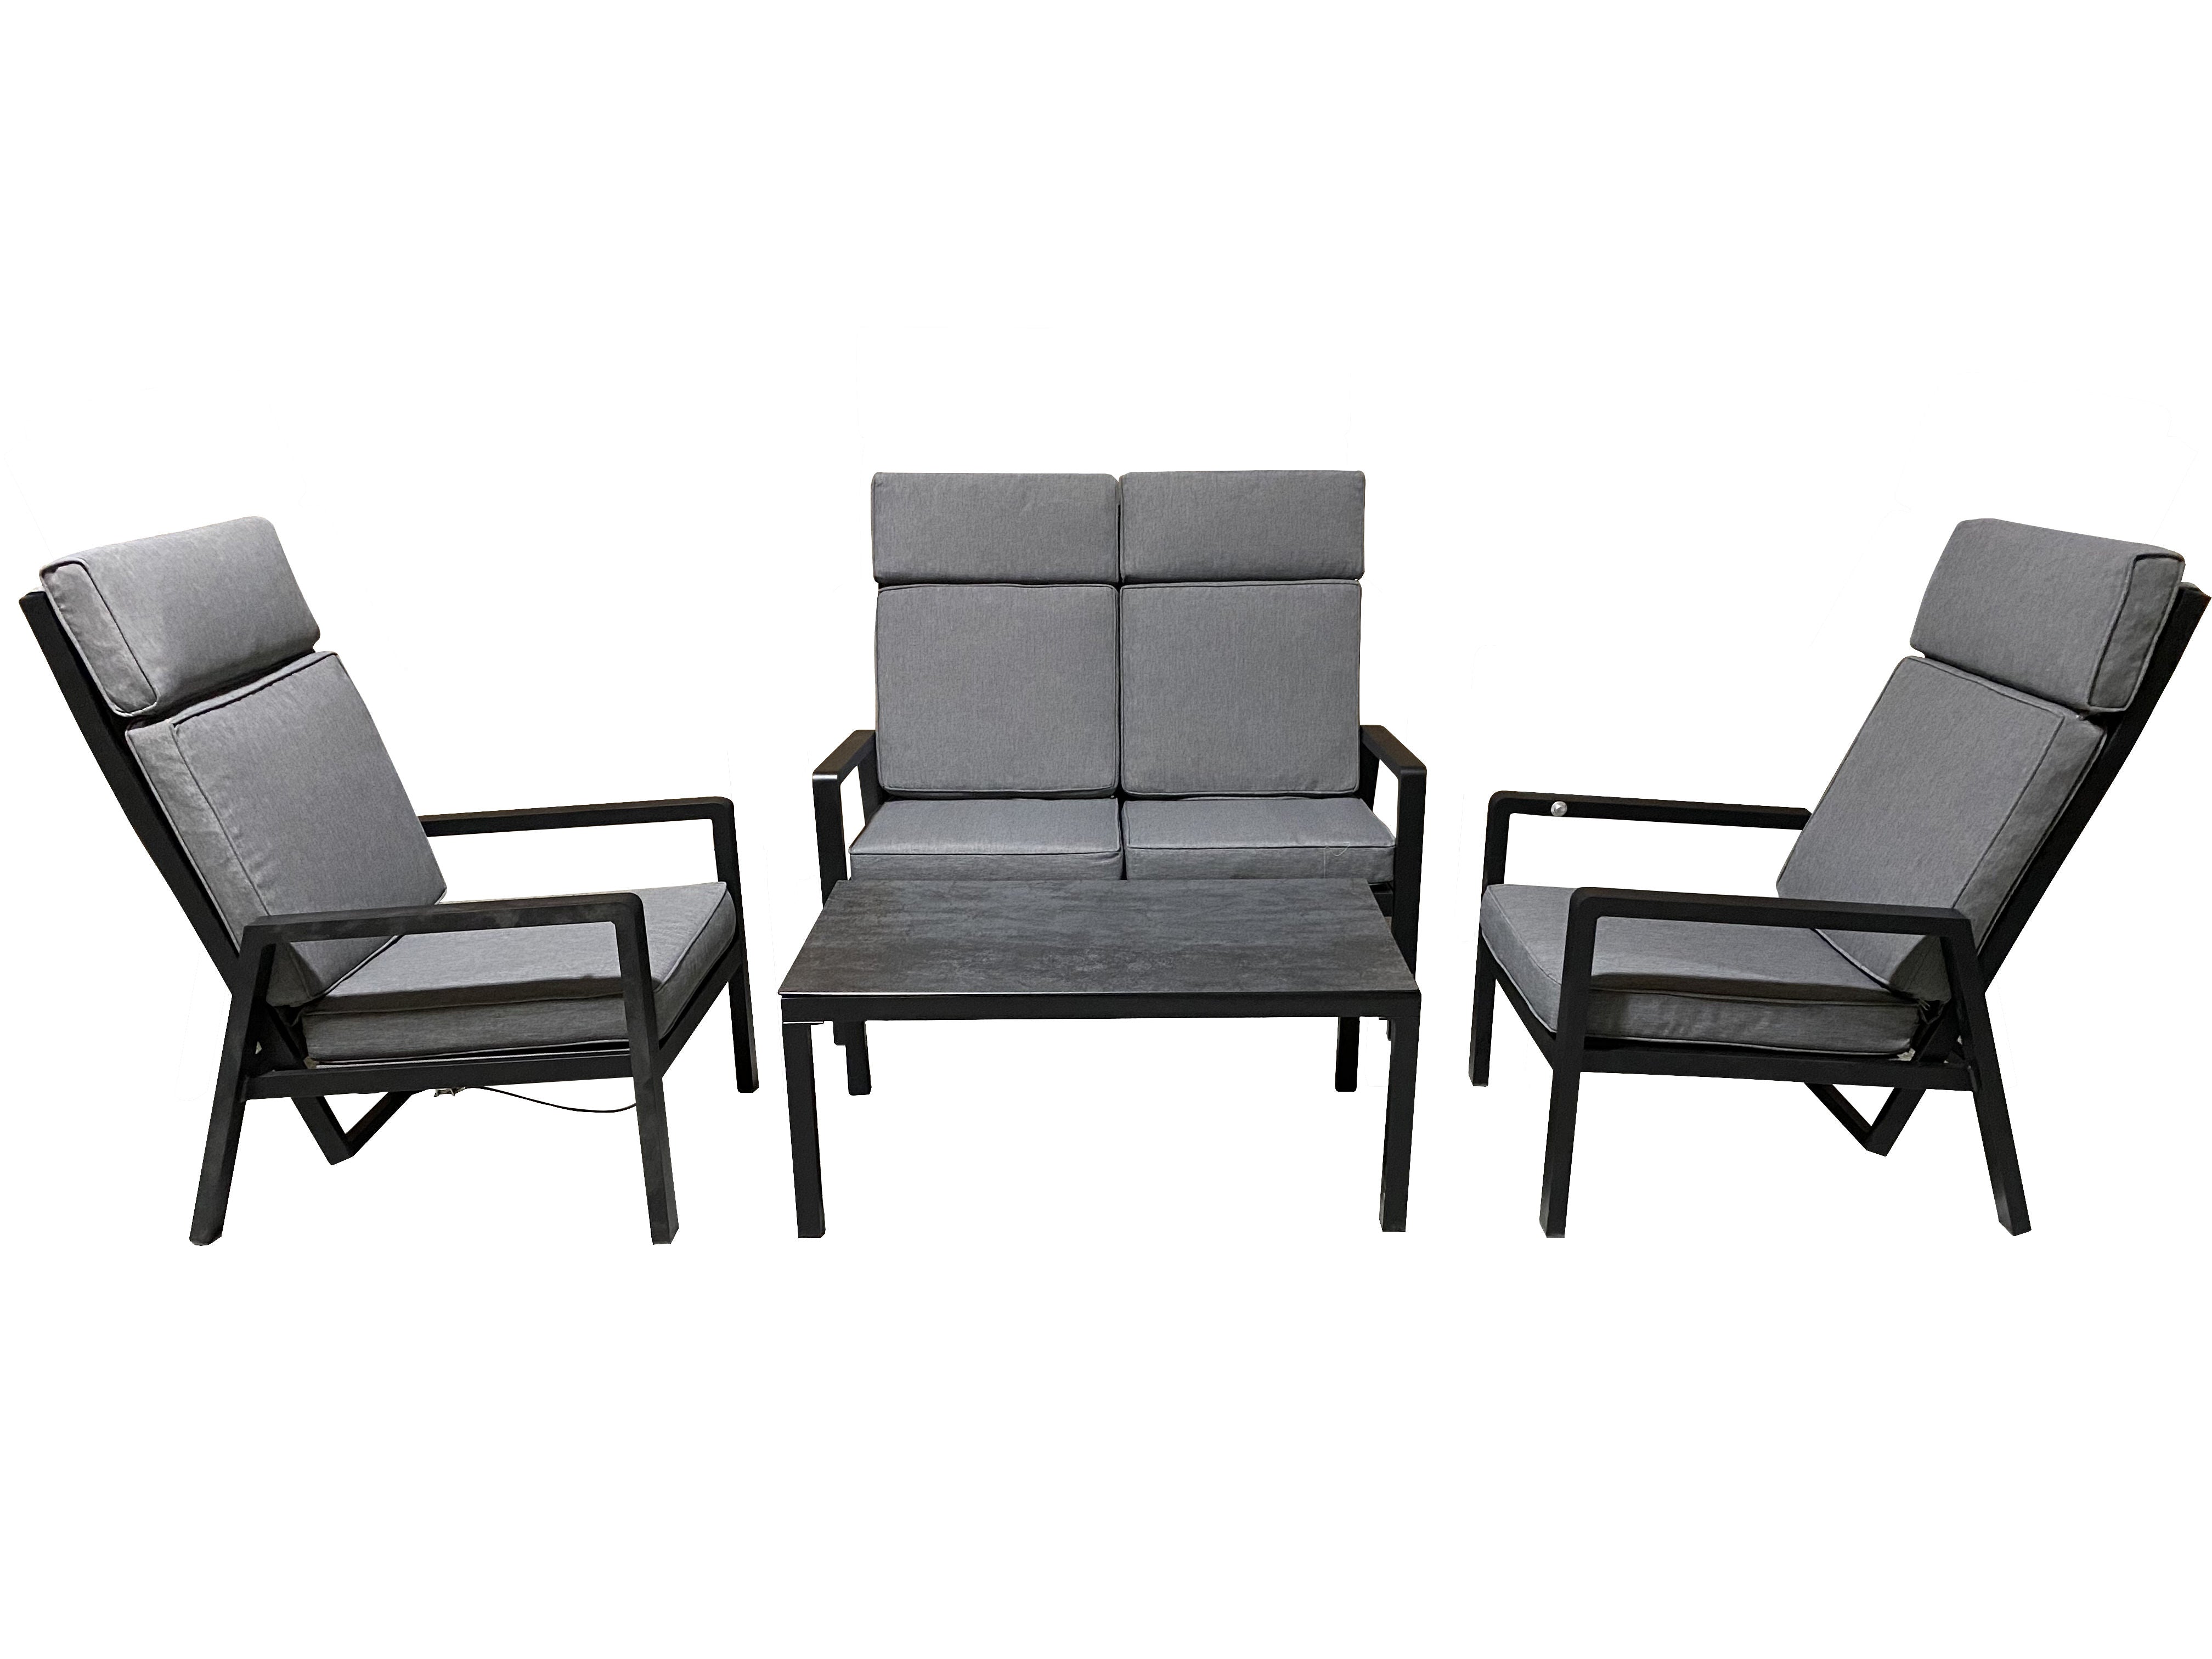 PatioZone 4Pcs Sofa Set with Reclining Chairs 3" Olefin Cushions and Aluminum Frame (MOSS-0926NC) - Black / Grey